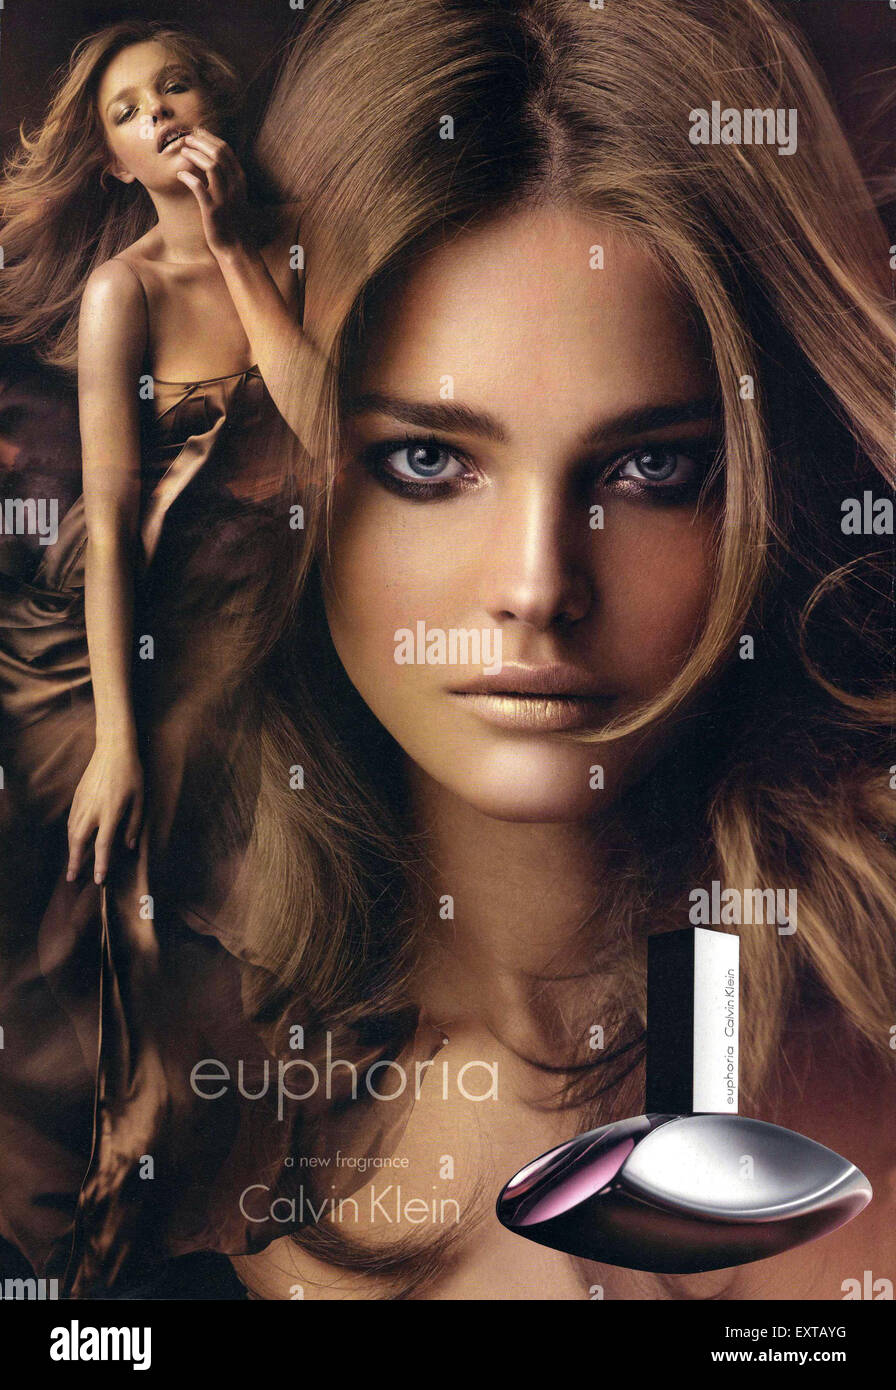 Calvin klein euphoria perfume hi-res stock photography and images - Alamy